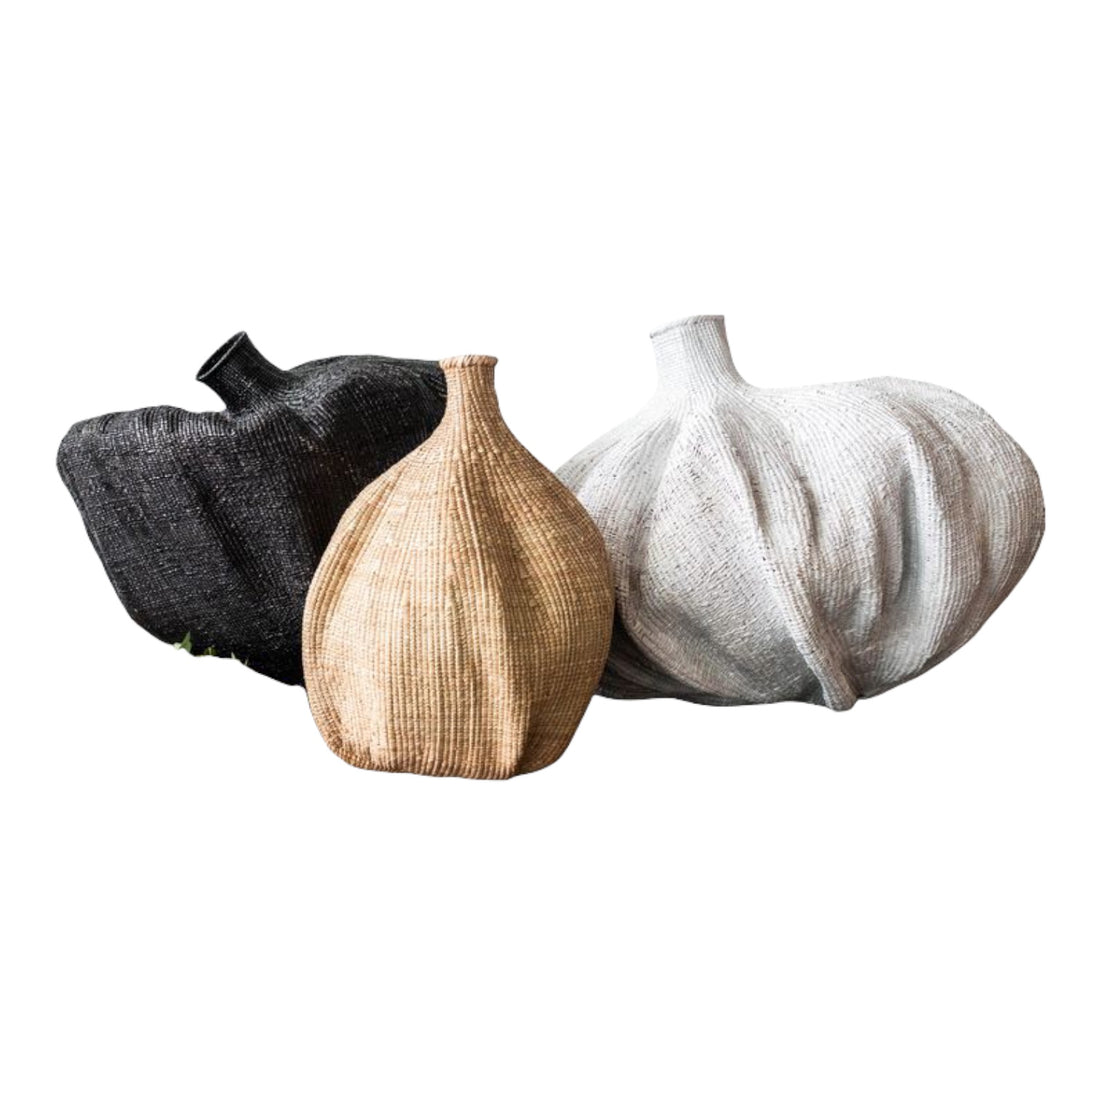 Garlic Gourds/Baskets - Black/White - eyahomeliving